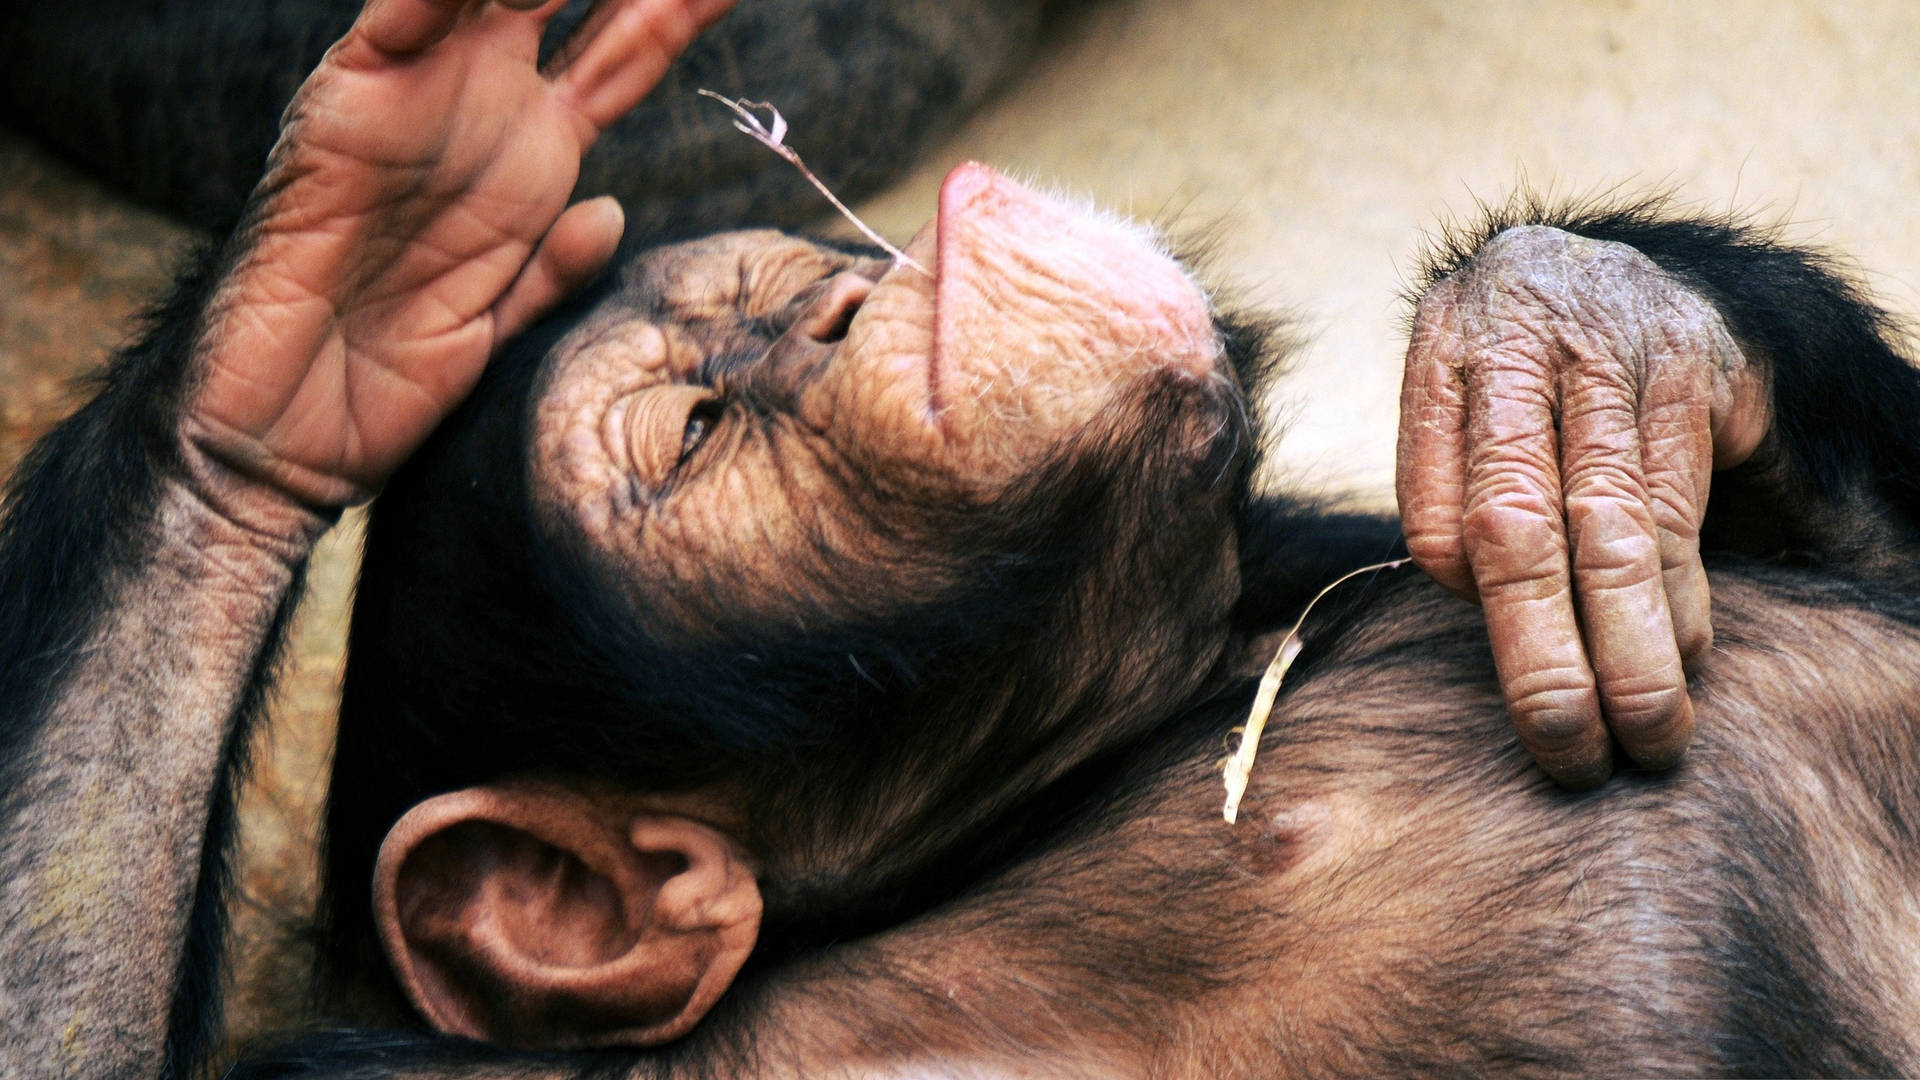 Peaceful Sleeping Chimpanzee